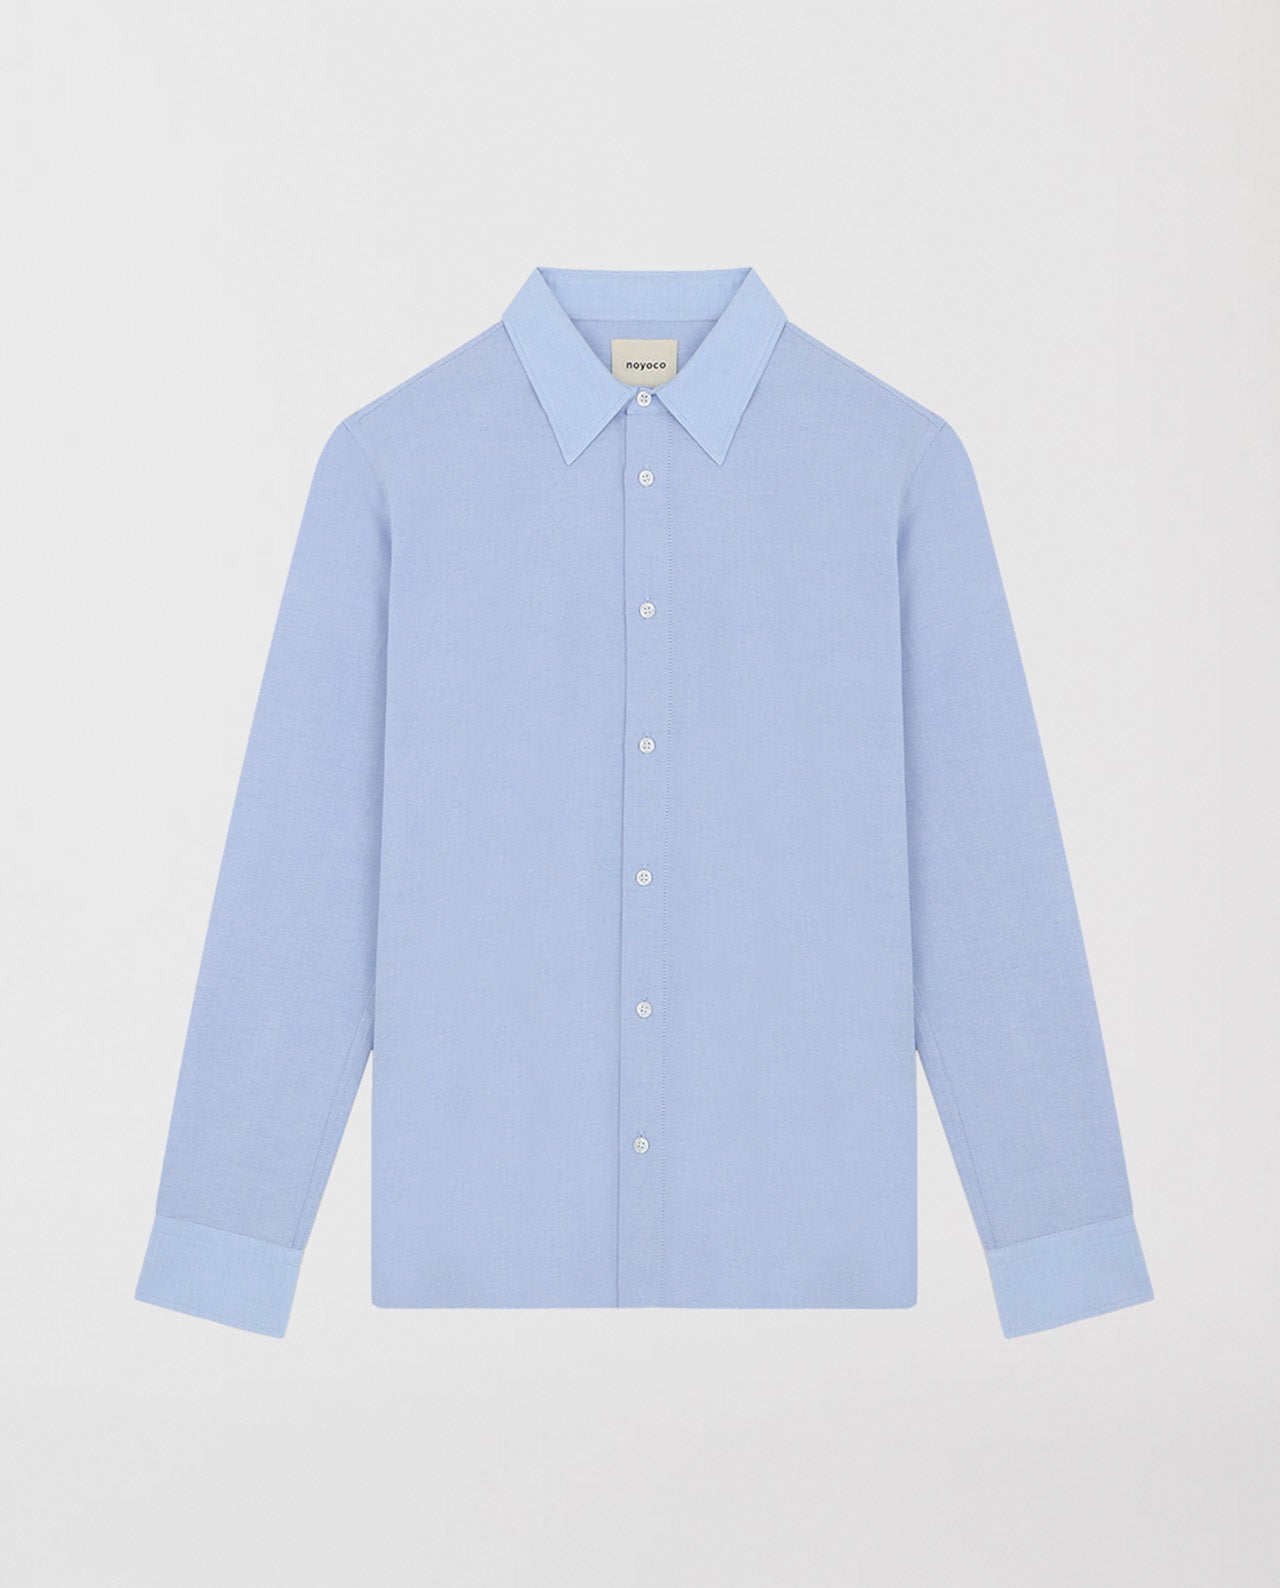 marché commun noyoco chemise ontario sky blue oxford coton biologique